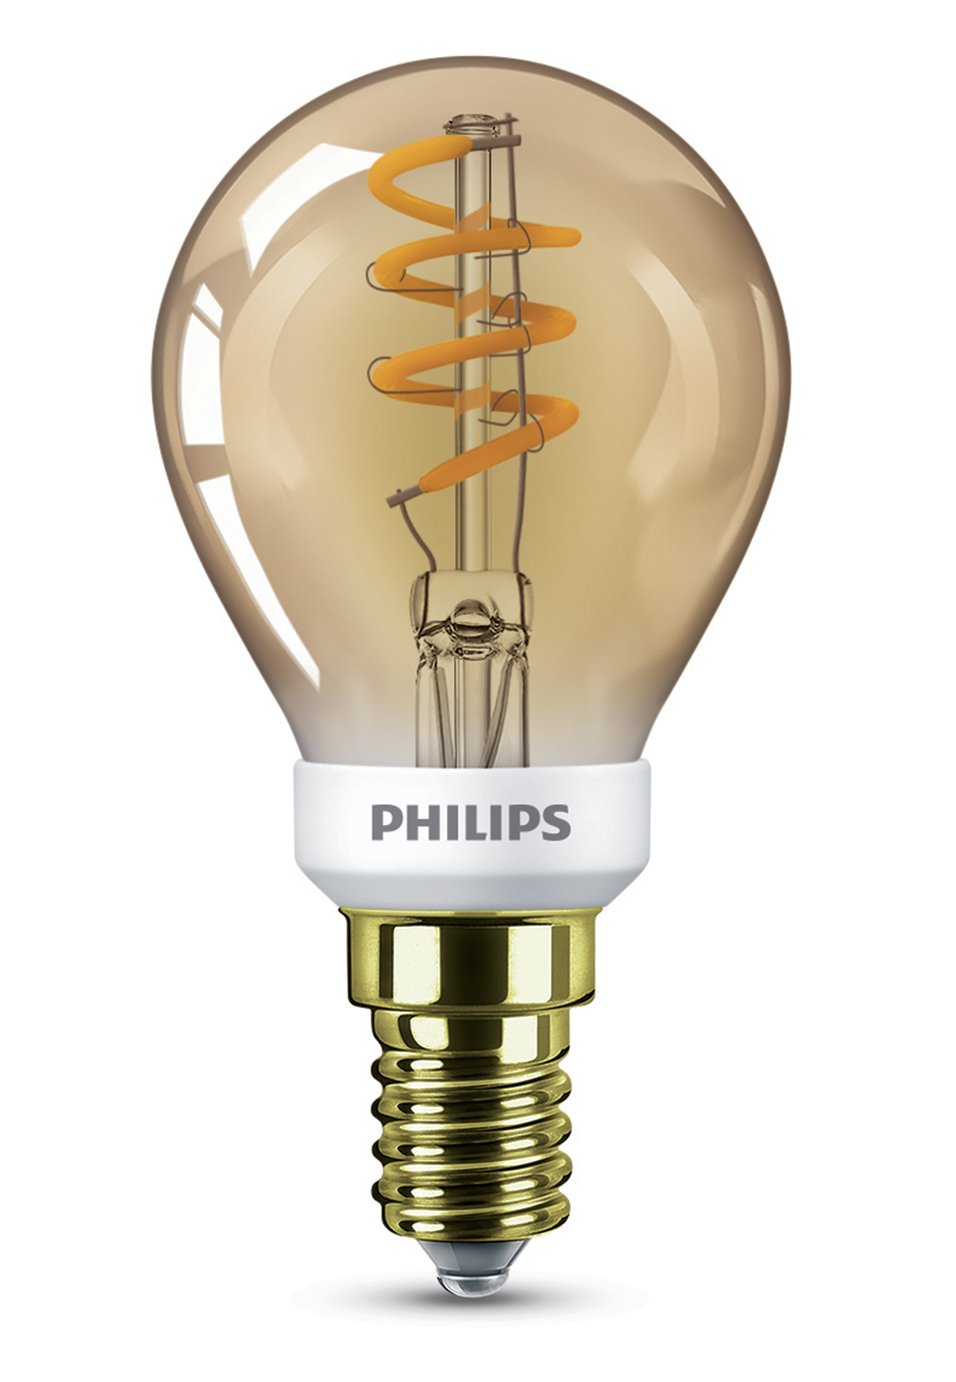 Philips LED 15W P45 E14 SES Classic Light Bulb - Gold